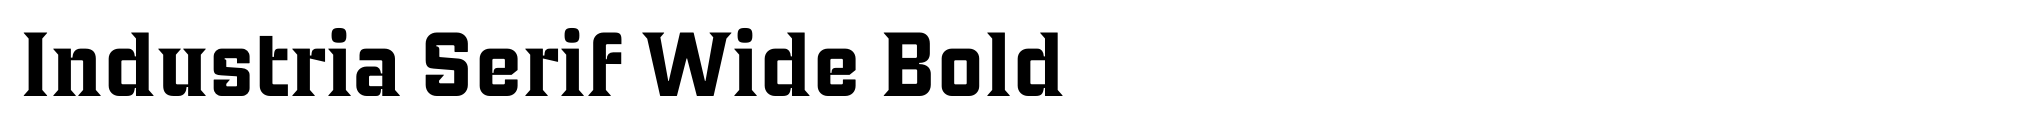 Industria Serif Wide Bold image